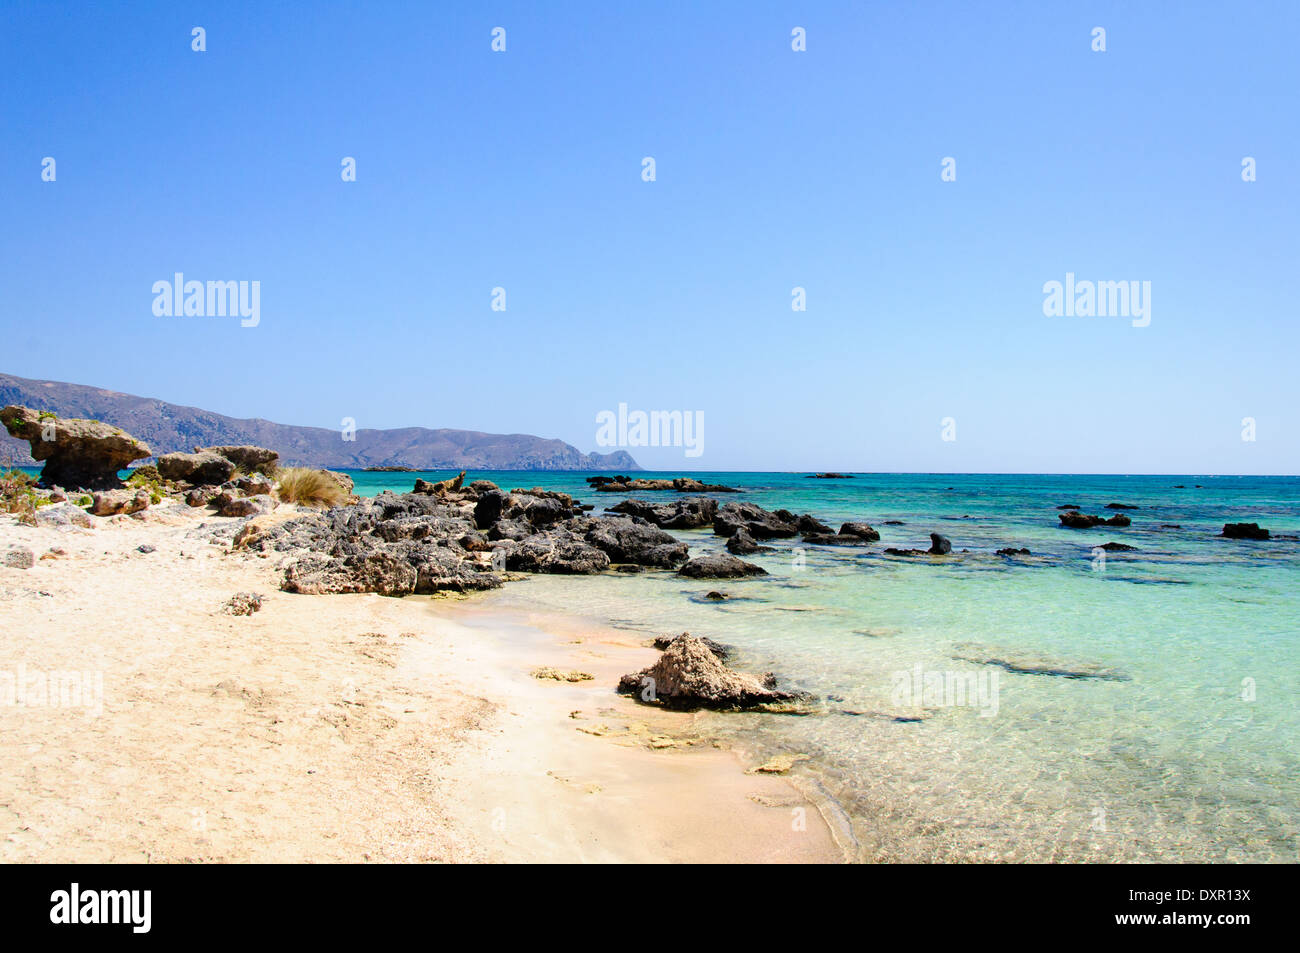 Elafonisi or Elafonissi, 'deer island' in Greek, one of the amazing beaches of Crete Stock Photo